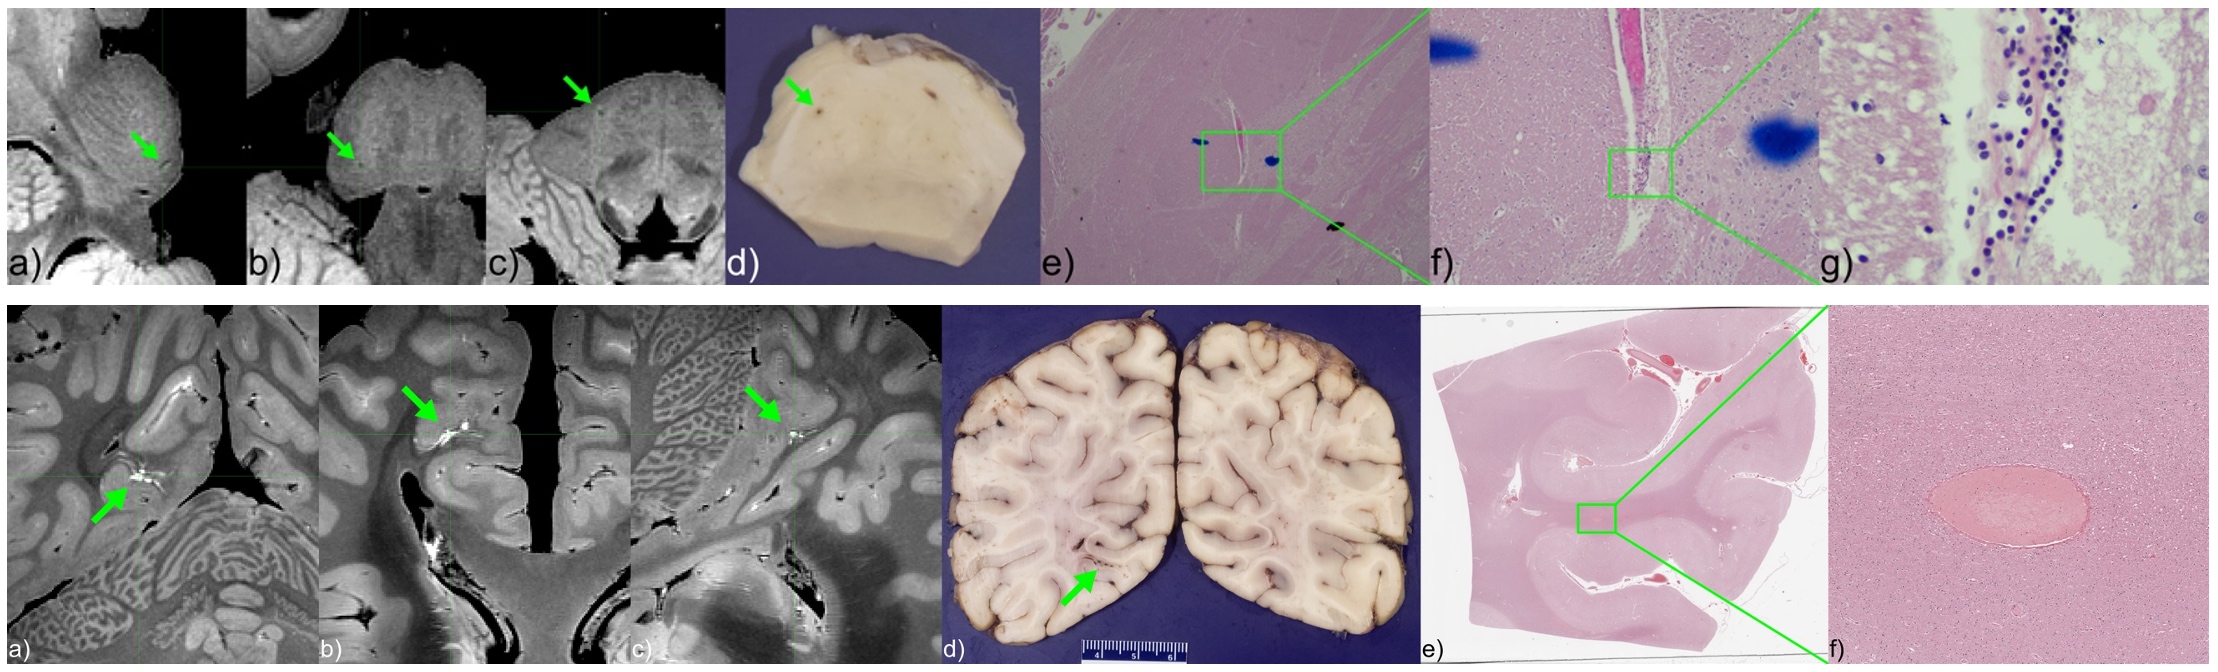 Ex Vivo MRI and Neuropathology